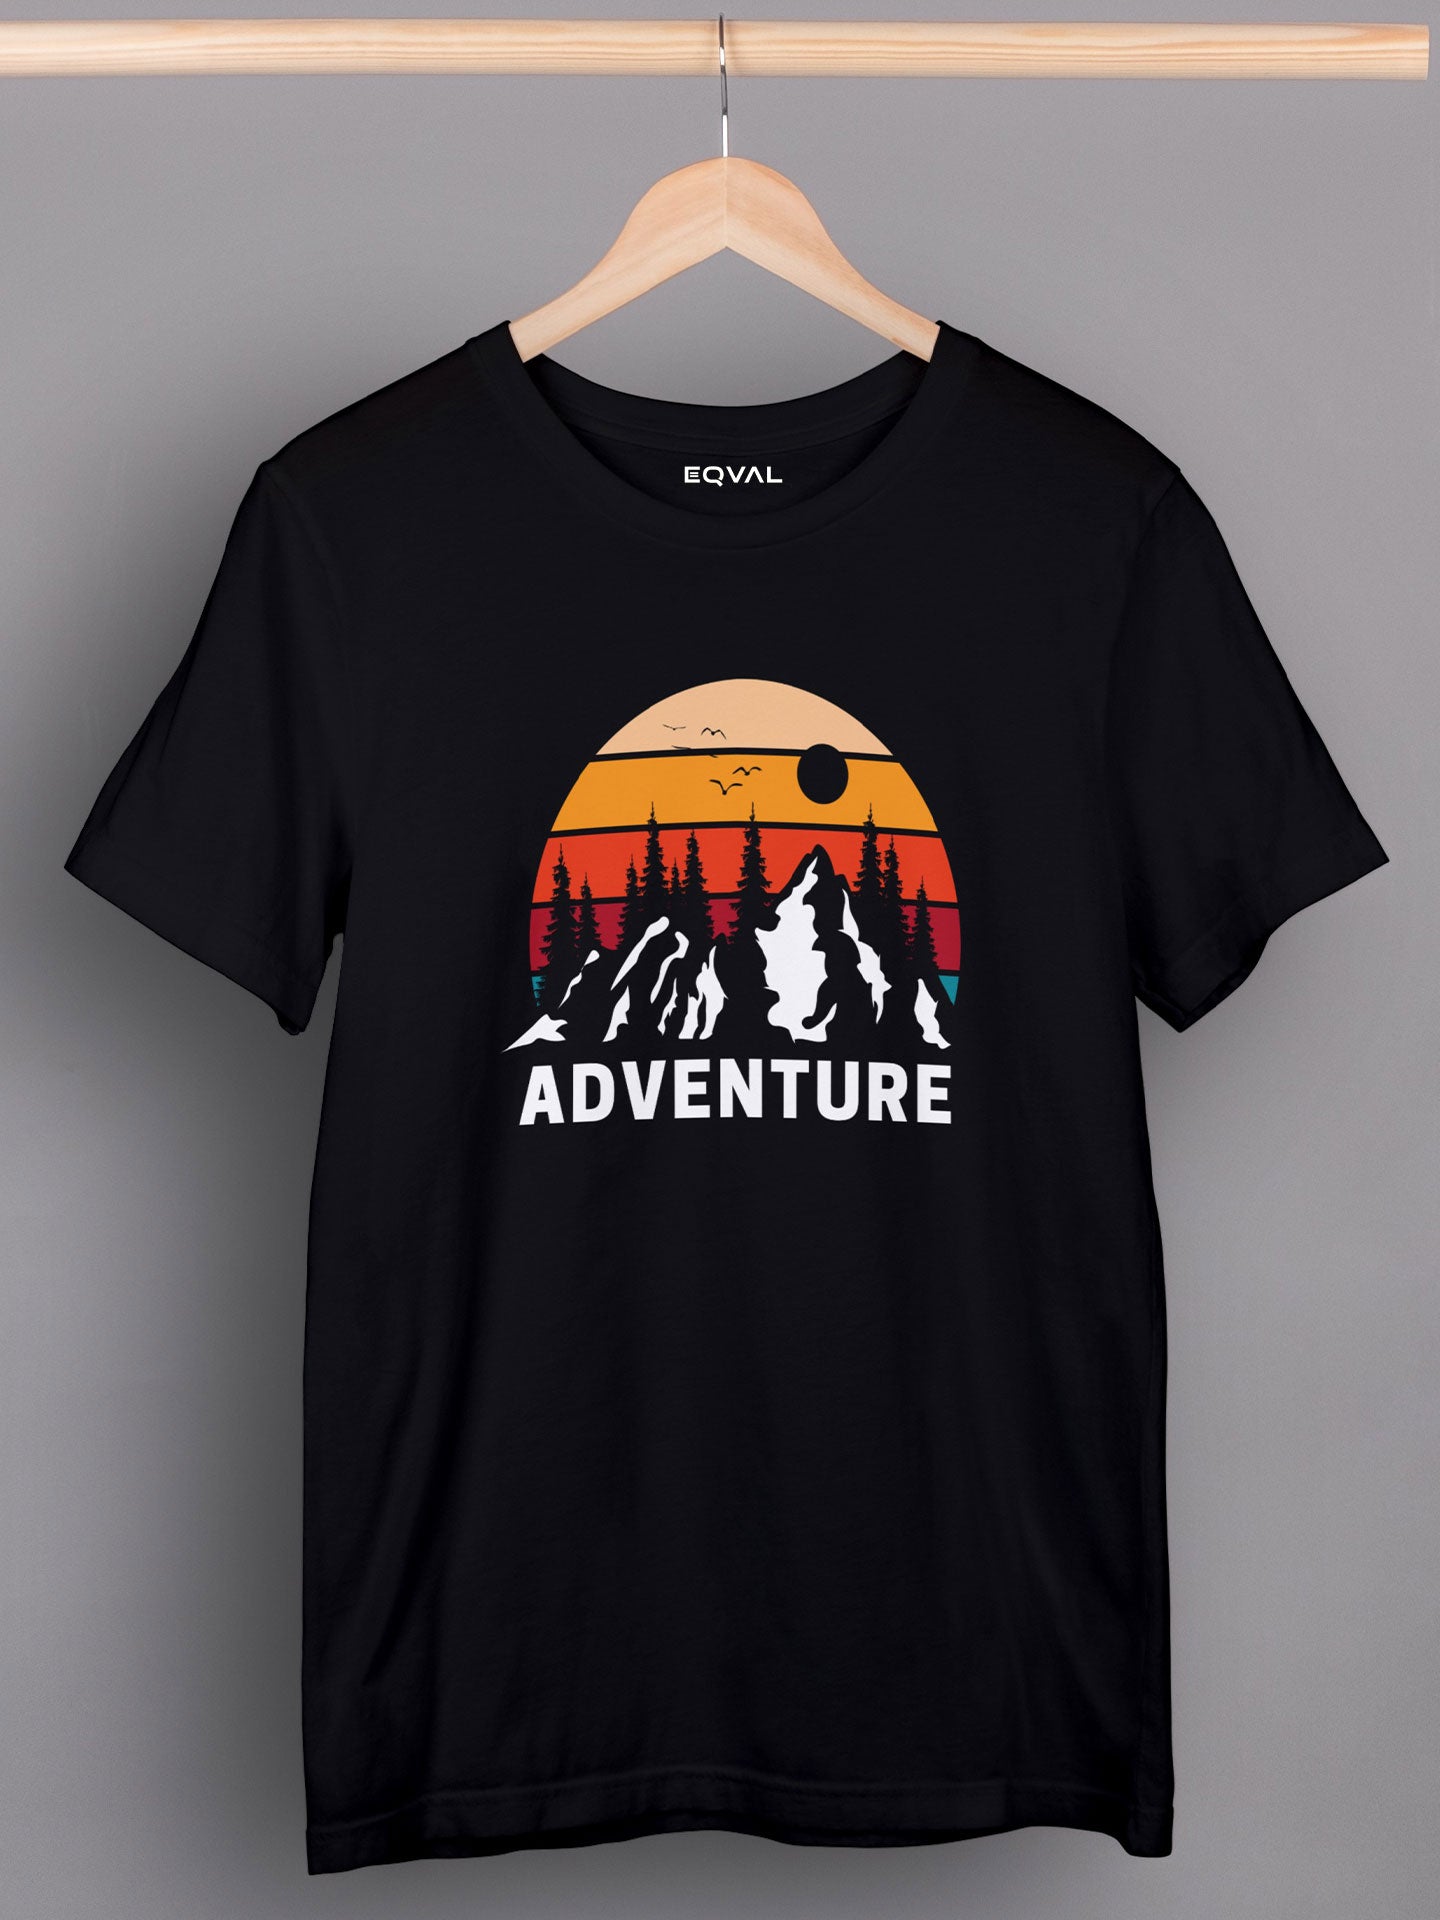 Men's Black Adventure Printed T-shirt